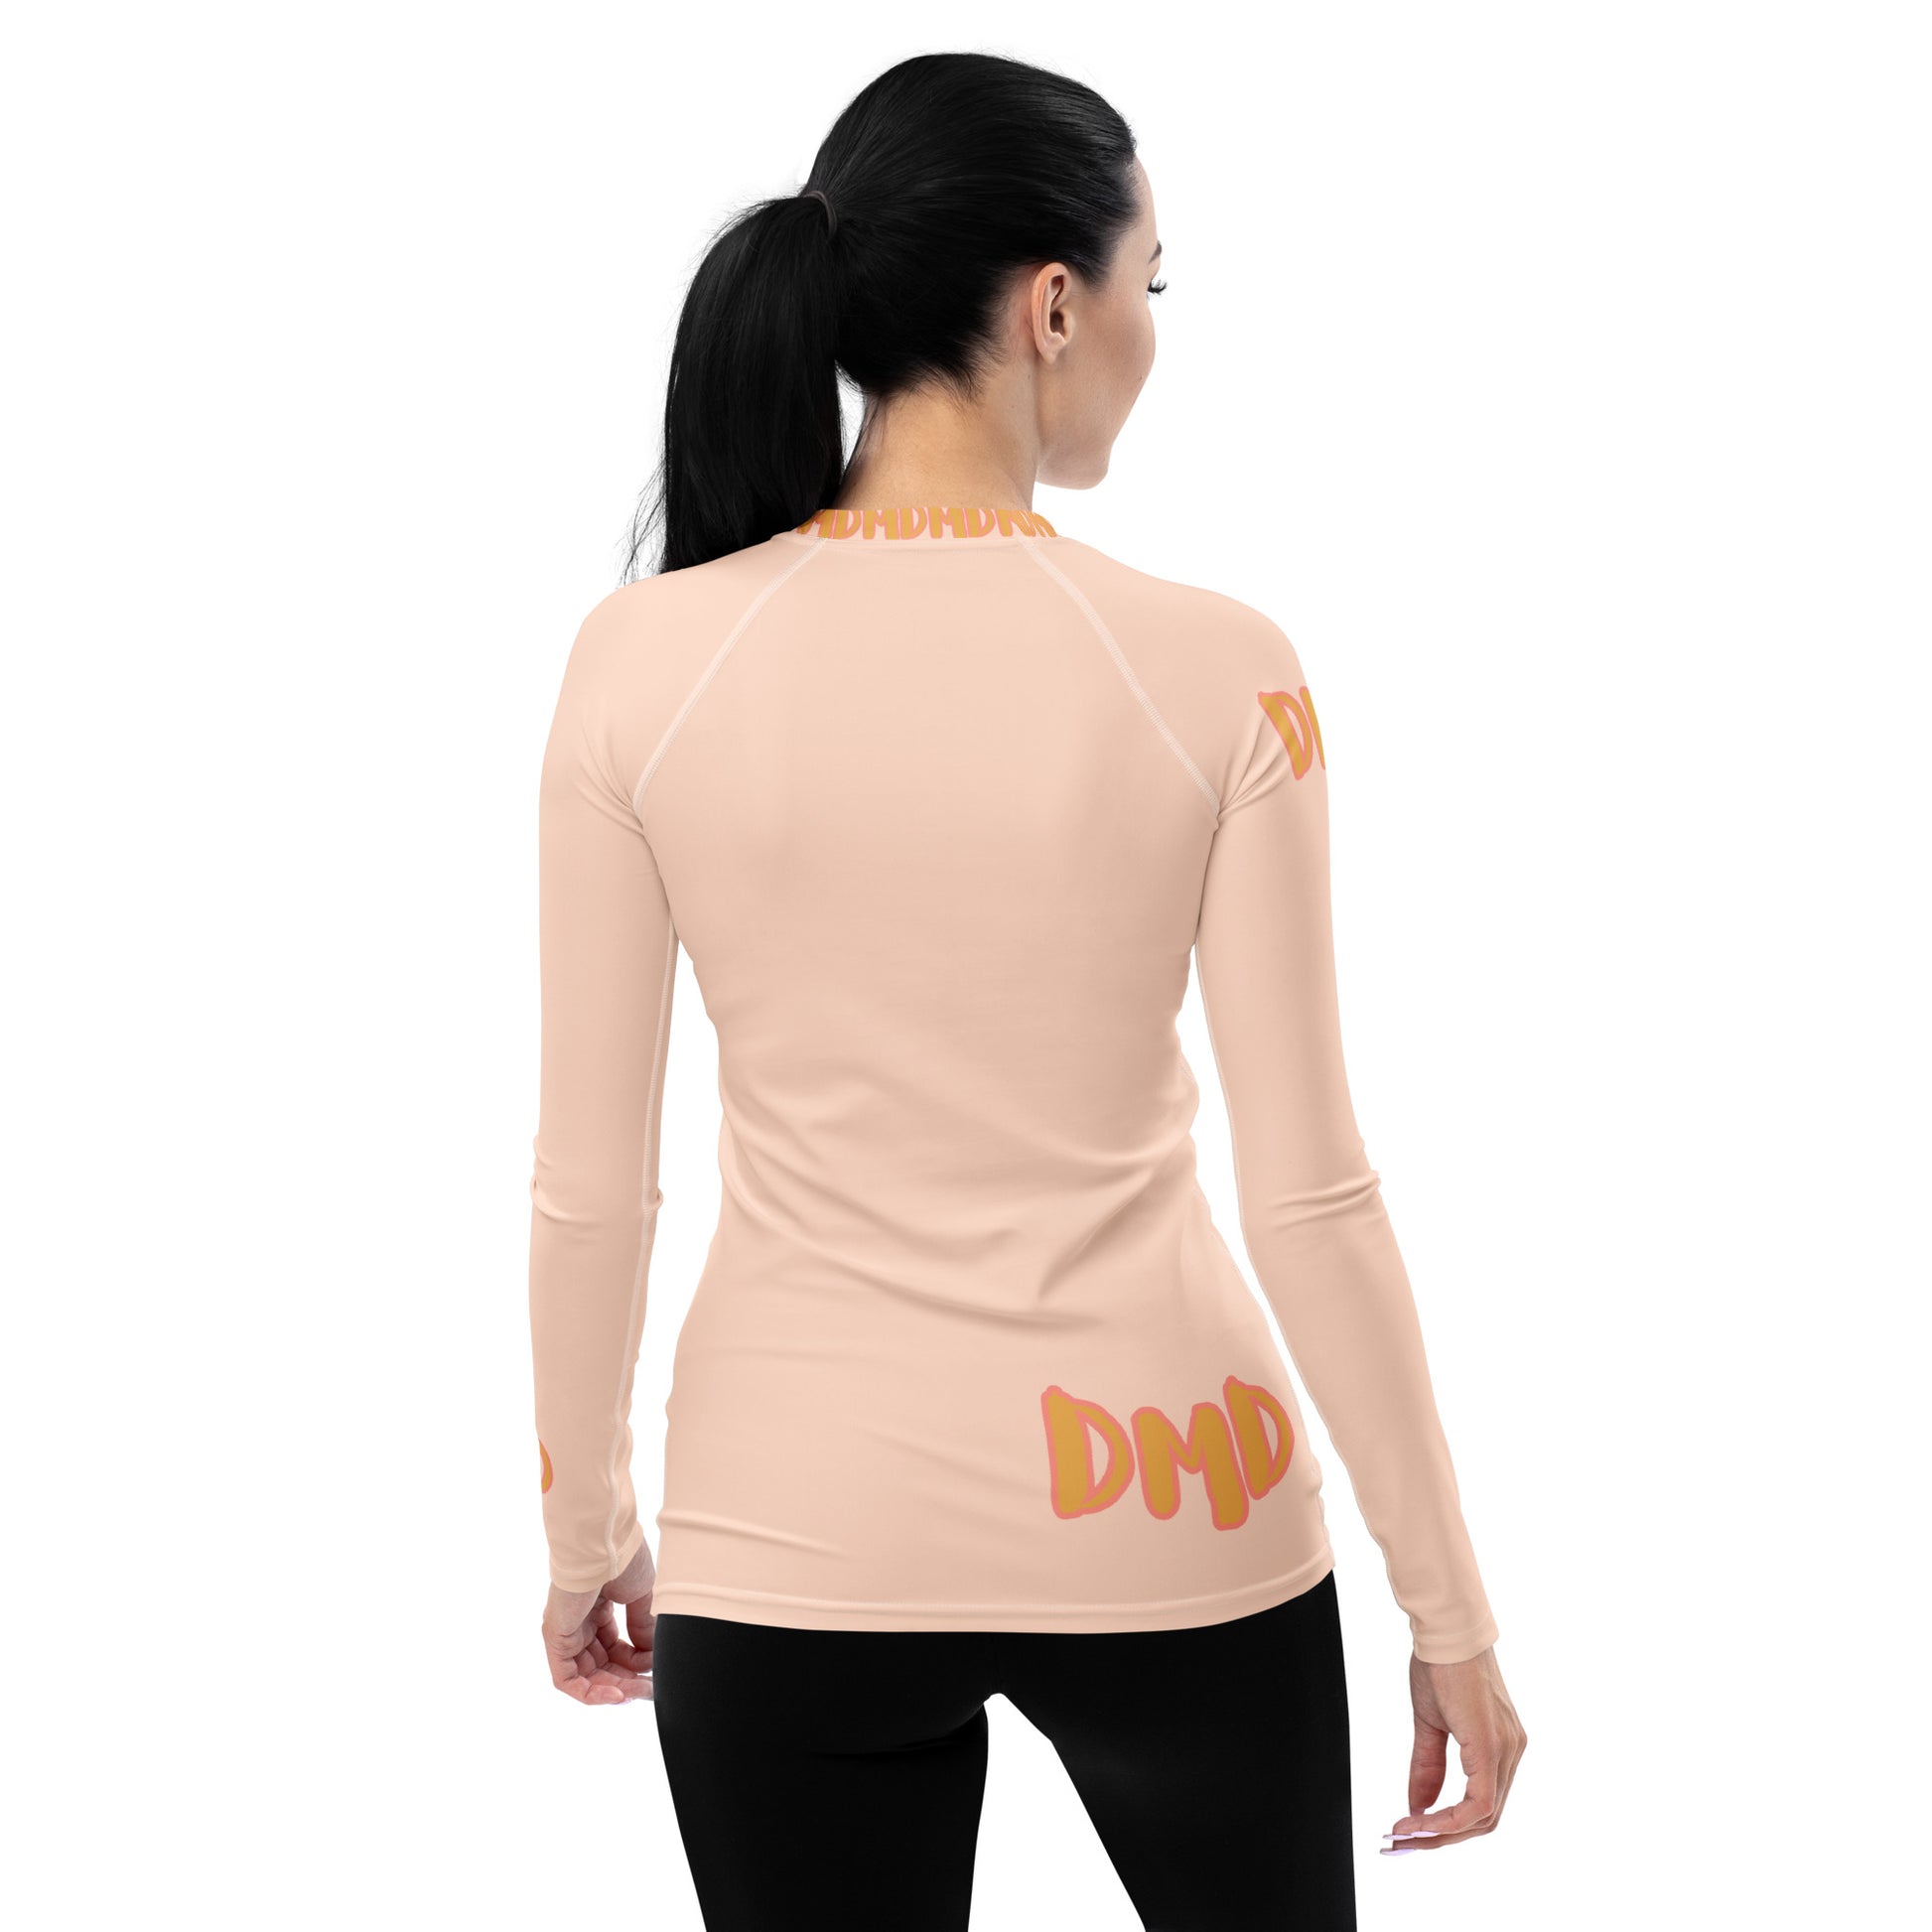 Casual & Athletic Wear DMD Logo Top - DMD Bags